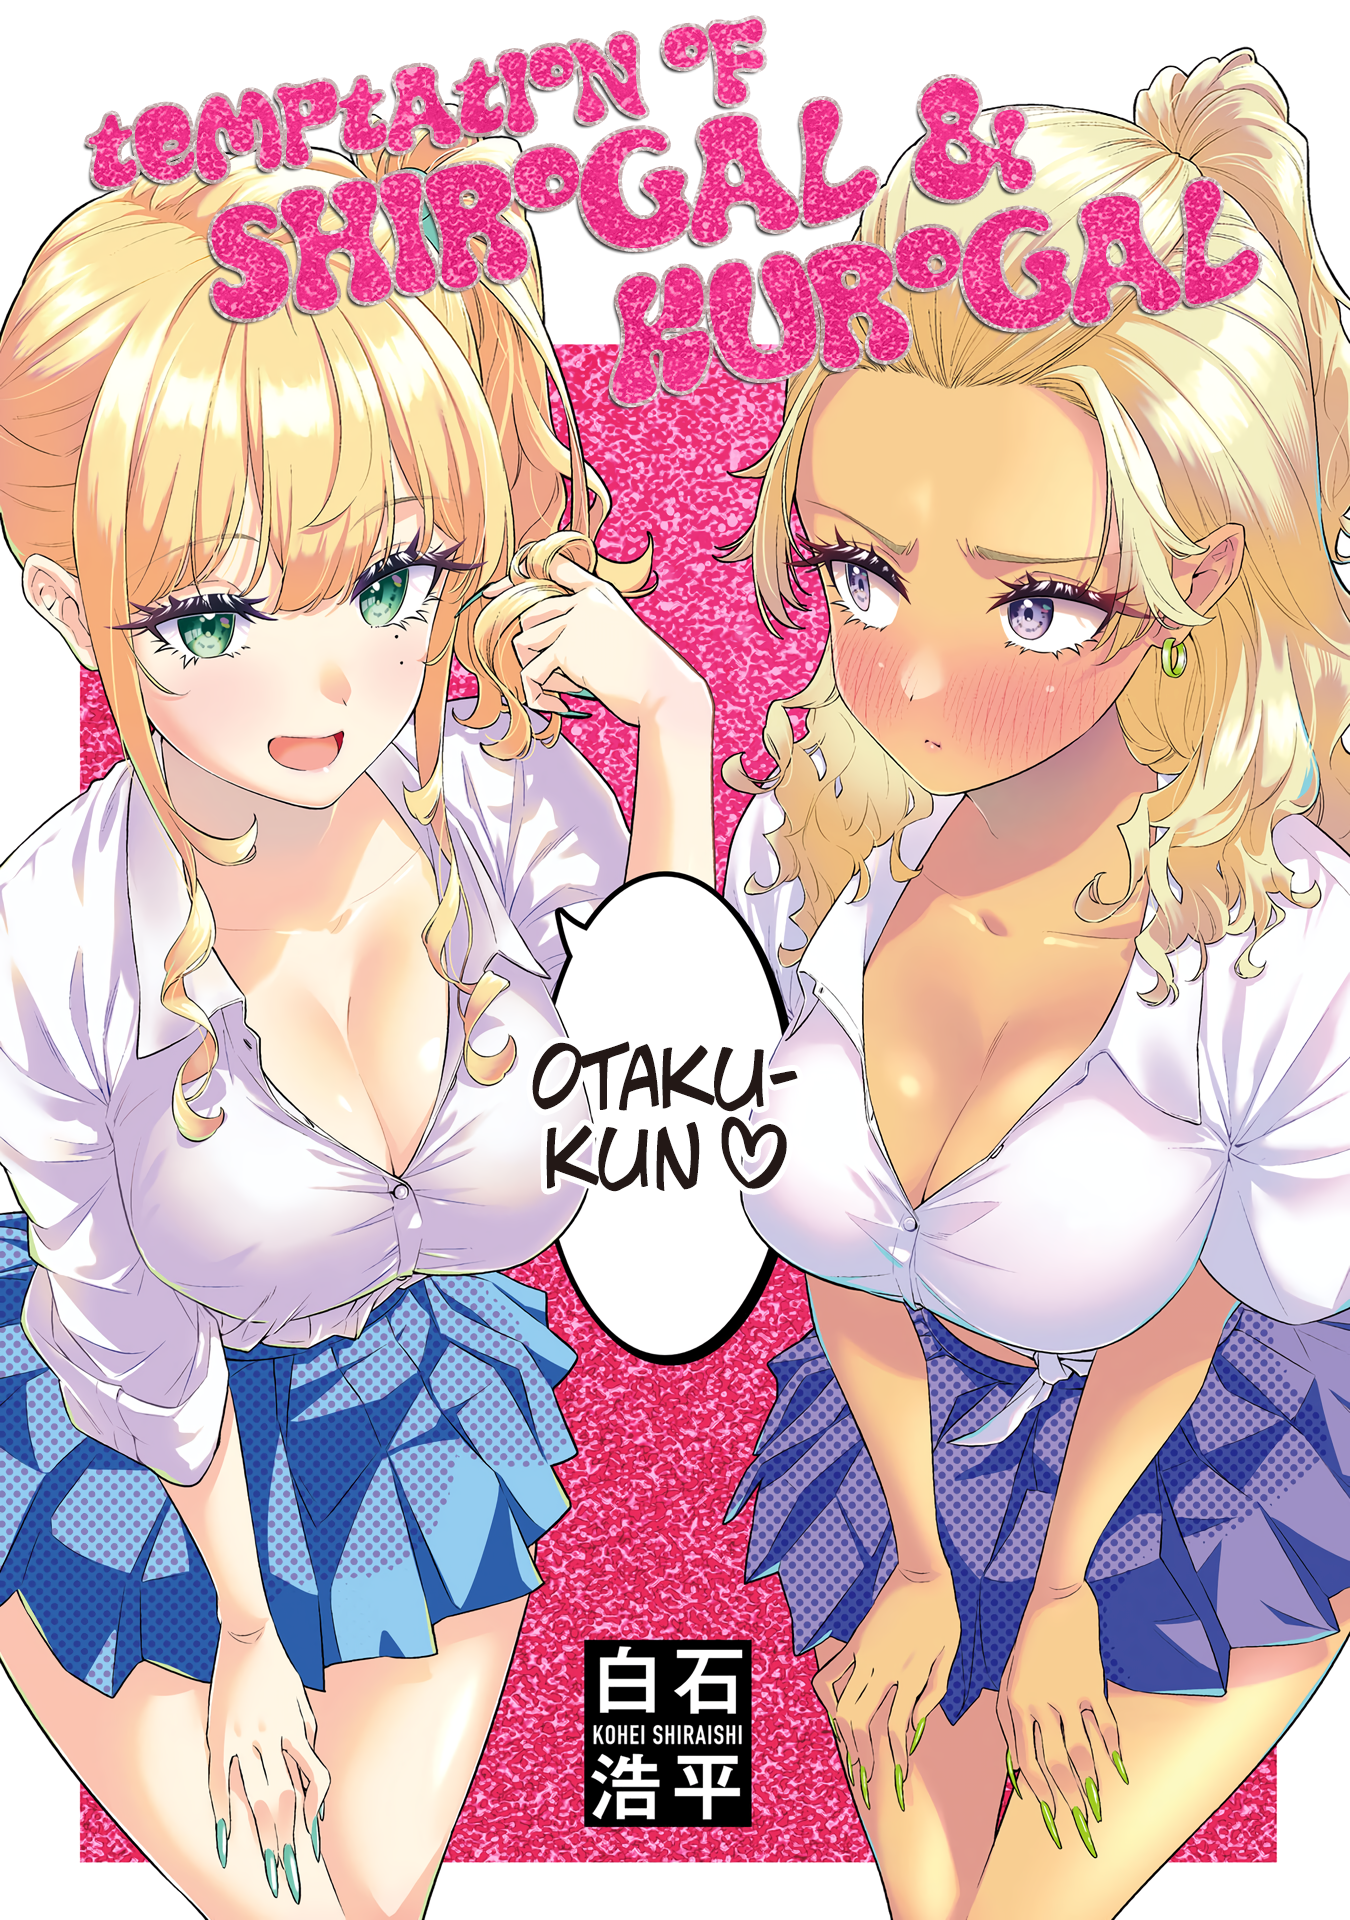 Temptation of Shiro Gal & Kuro Gal manga